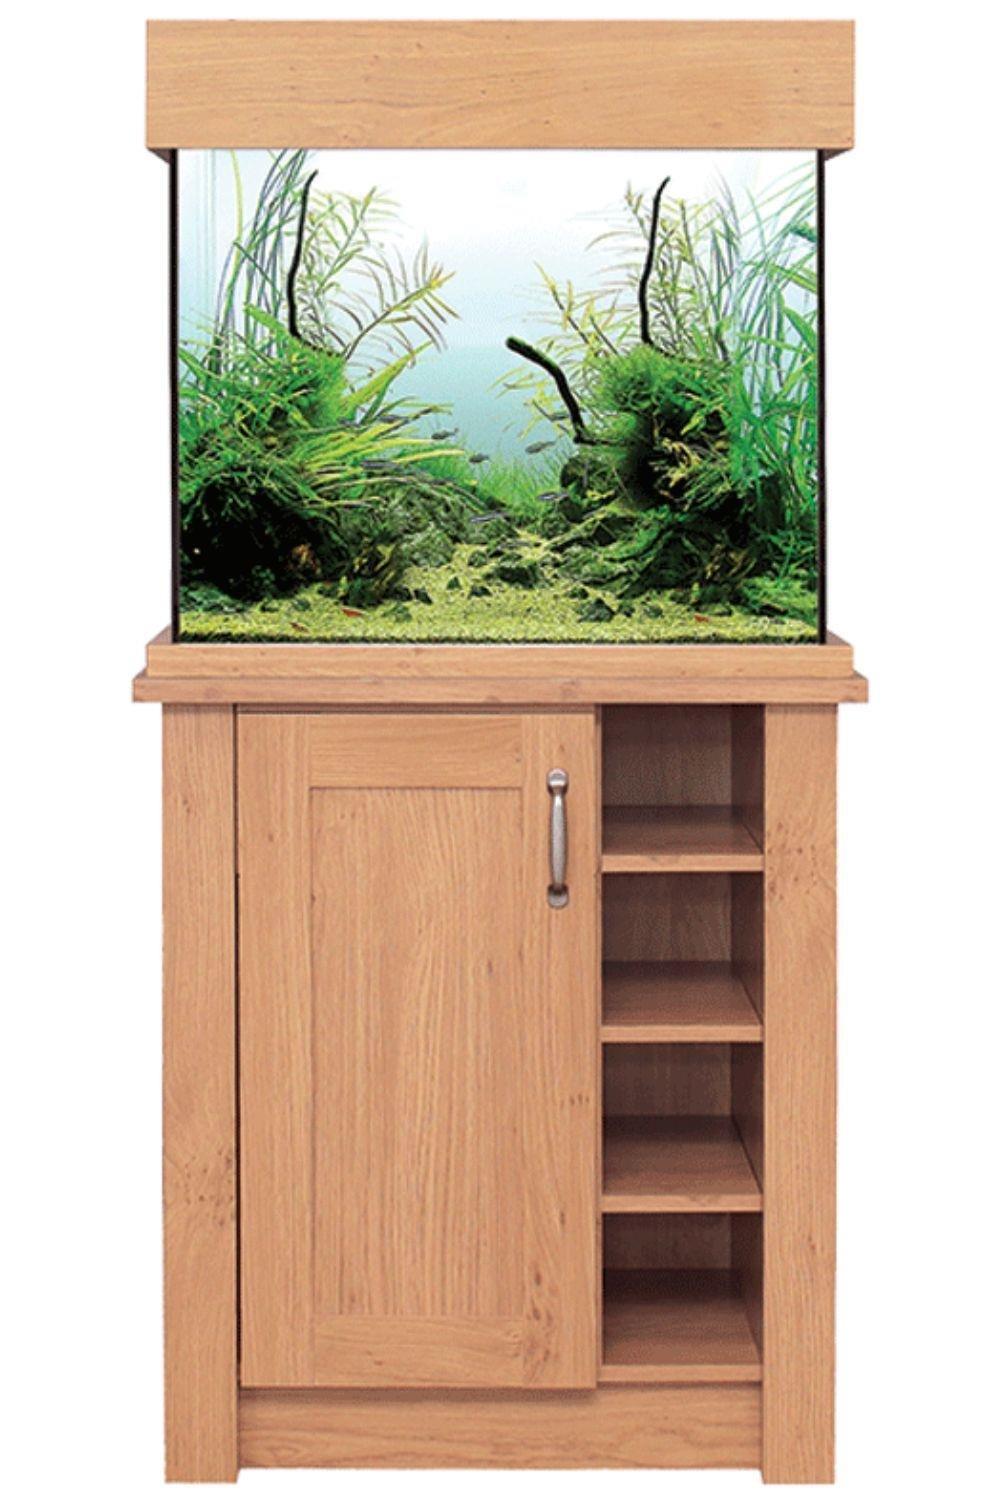 OakStyle 110L Aquarium and Oak Cabinet